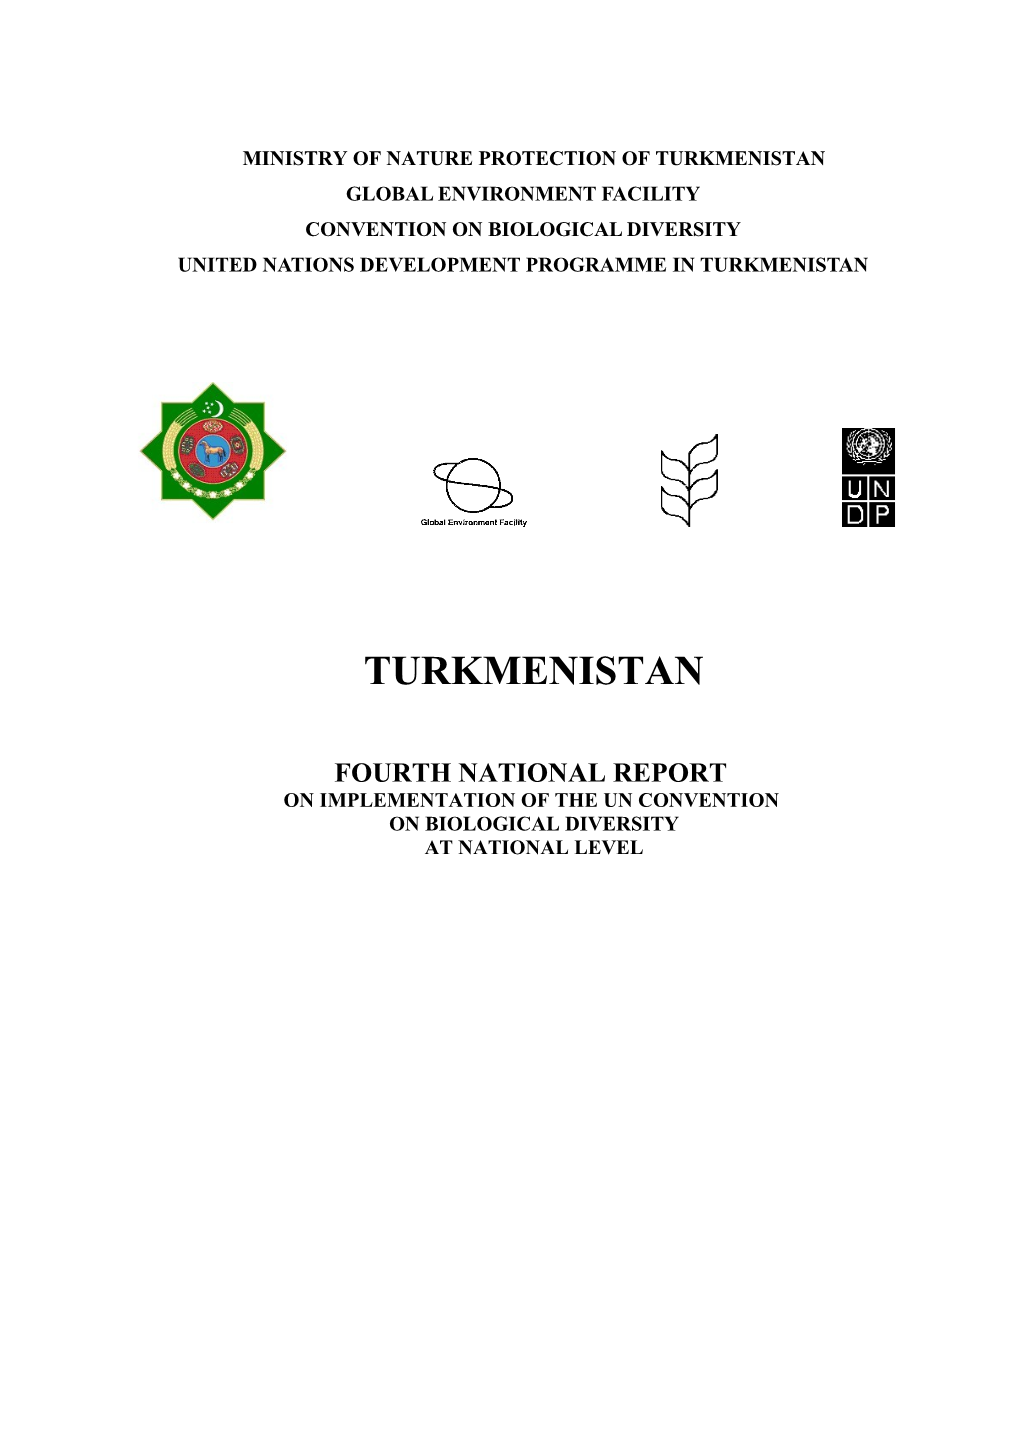 CBD Fourth National Report - Turkmenistan (English Version)